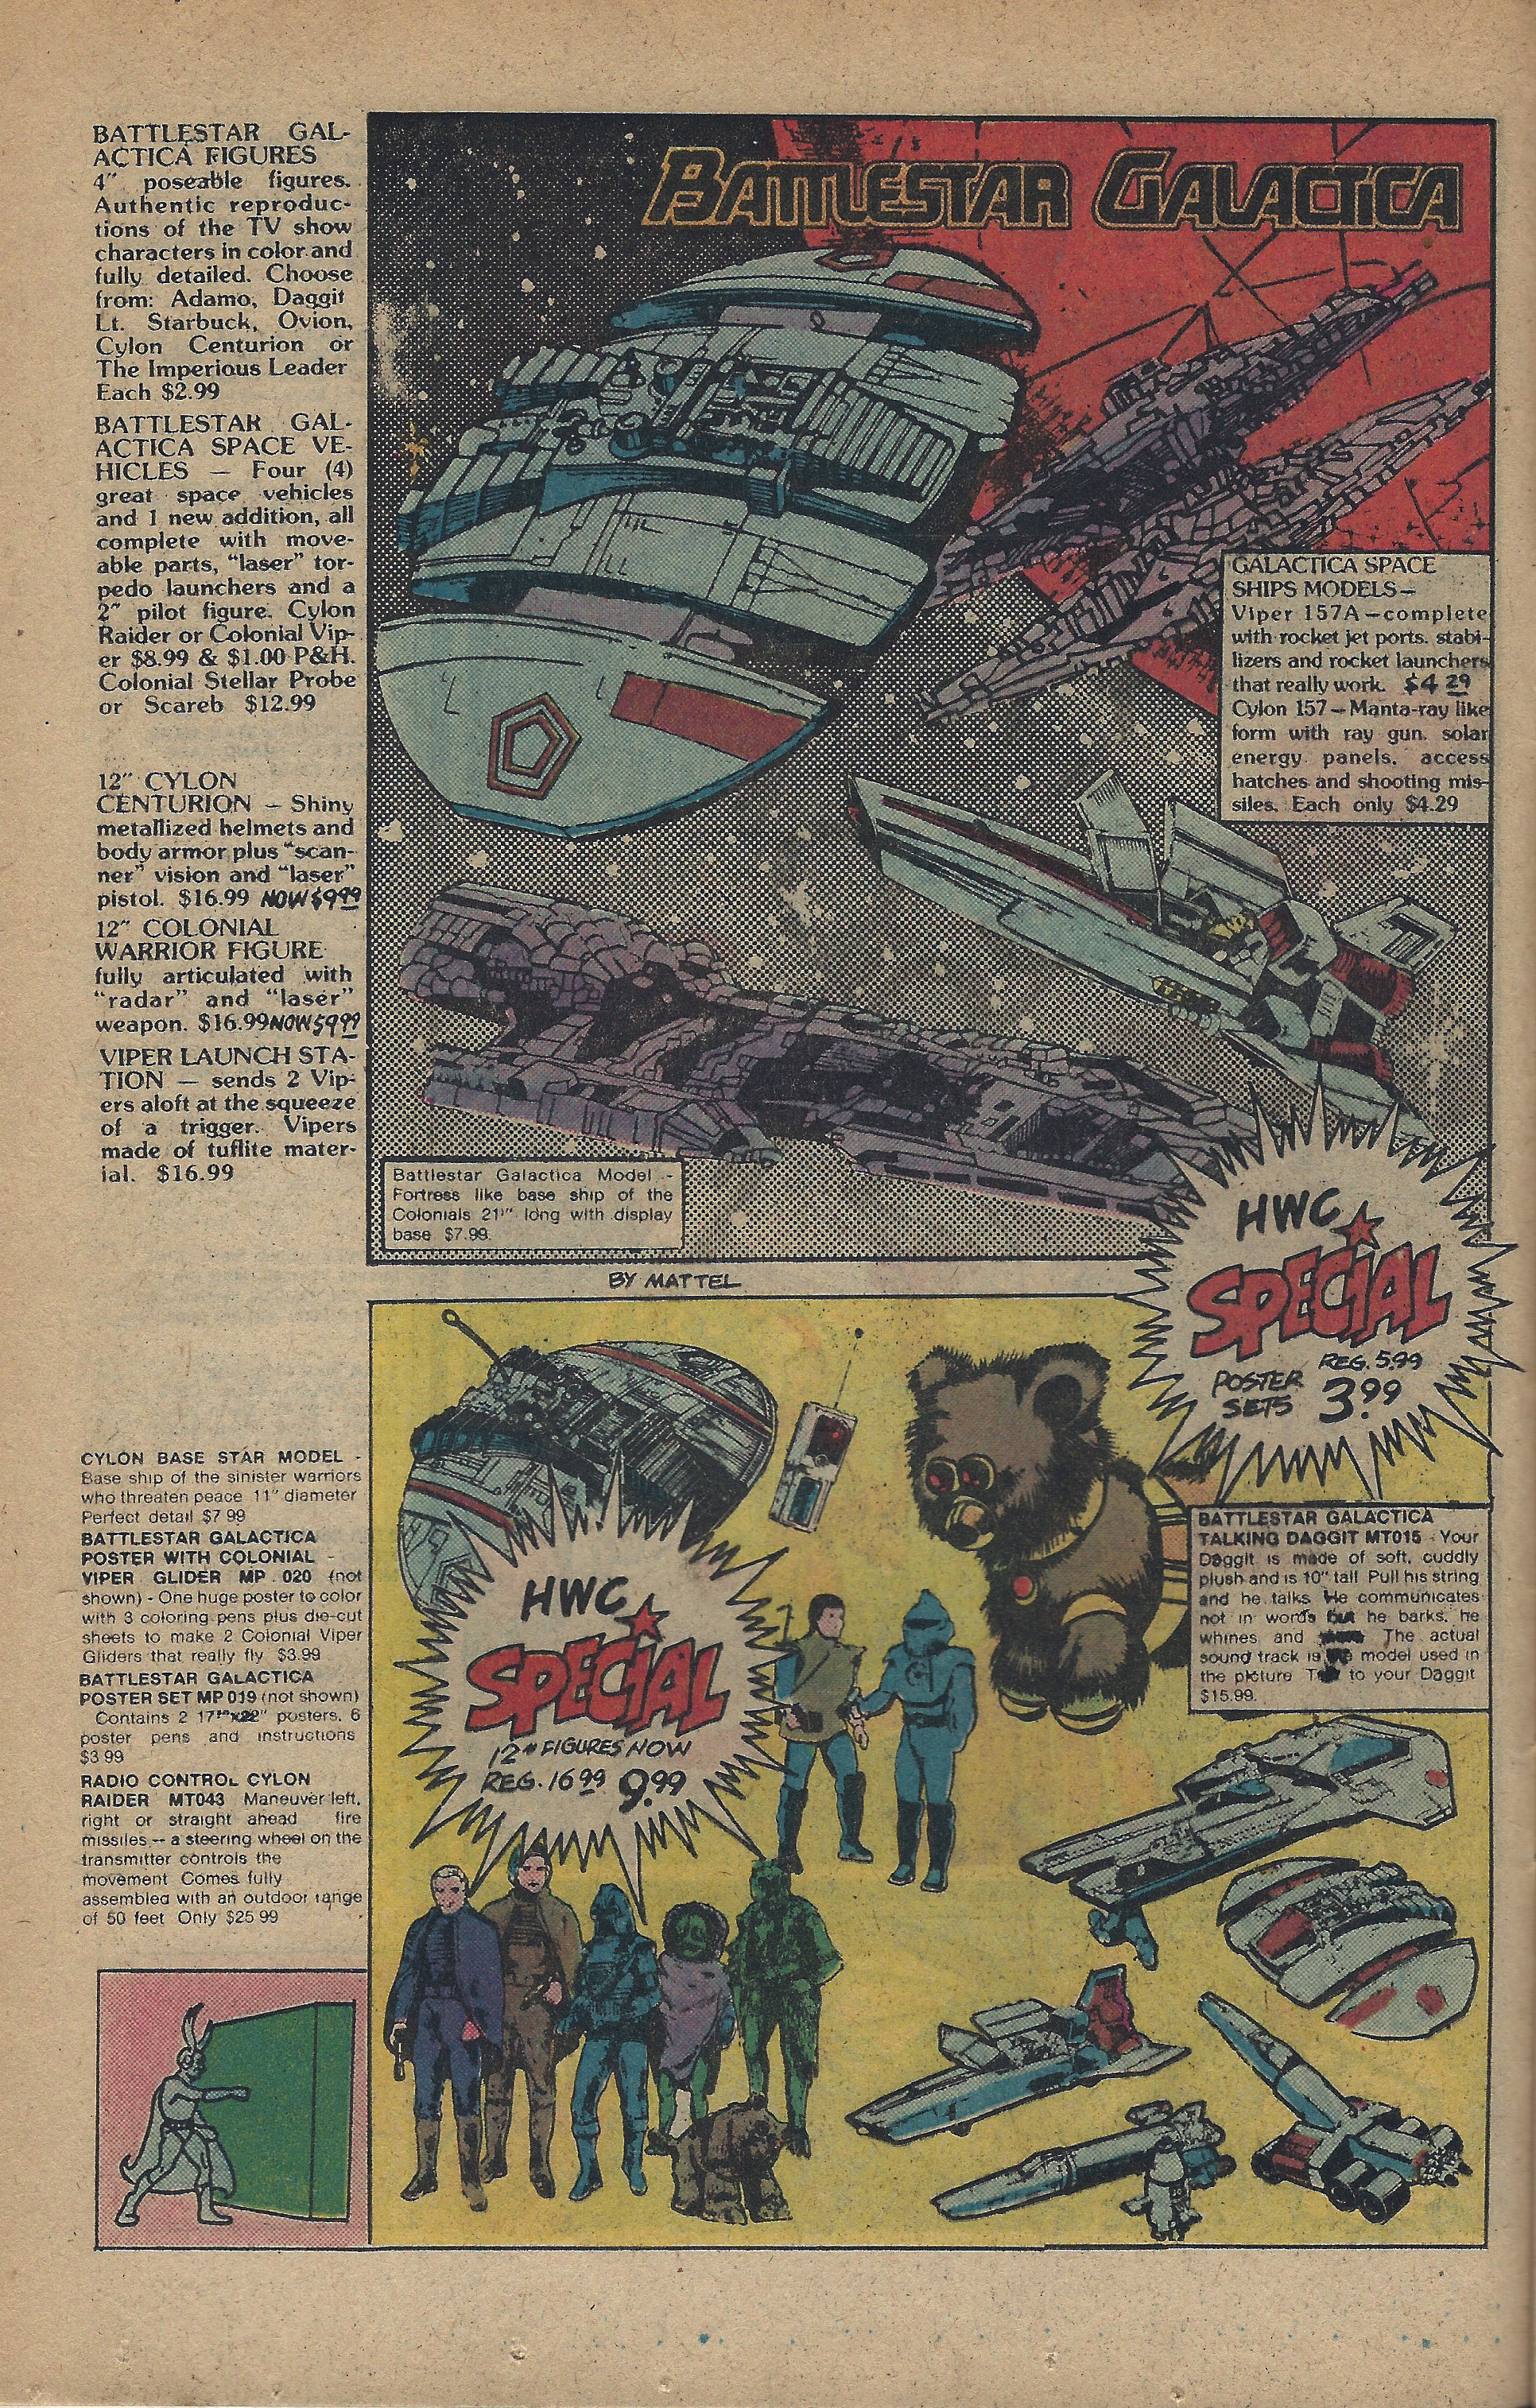 1979 Battlestar Galactica Toys in the Heroes World Catalog